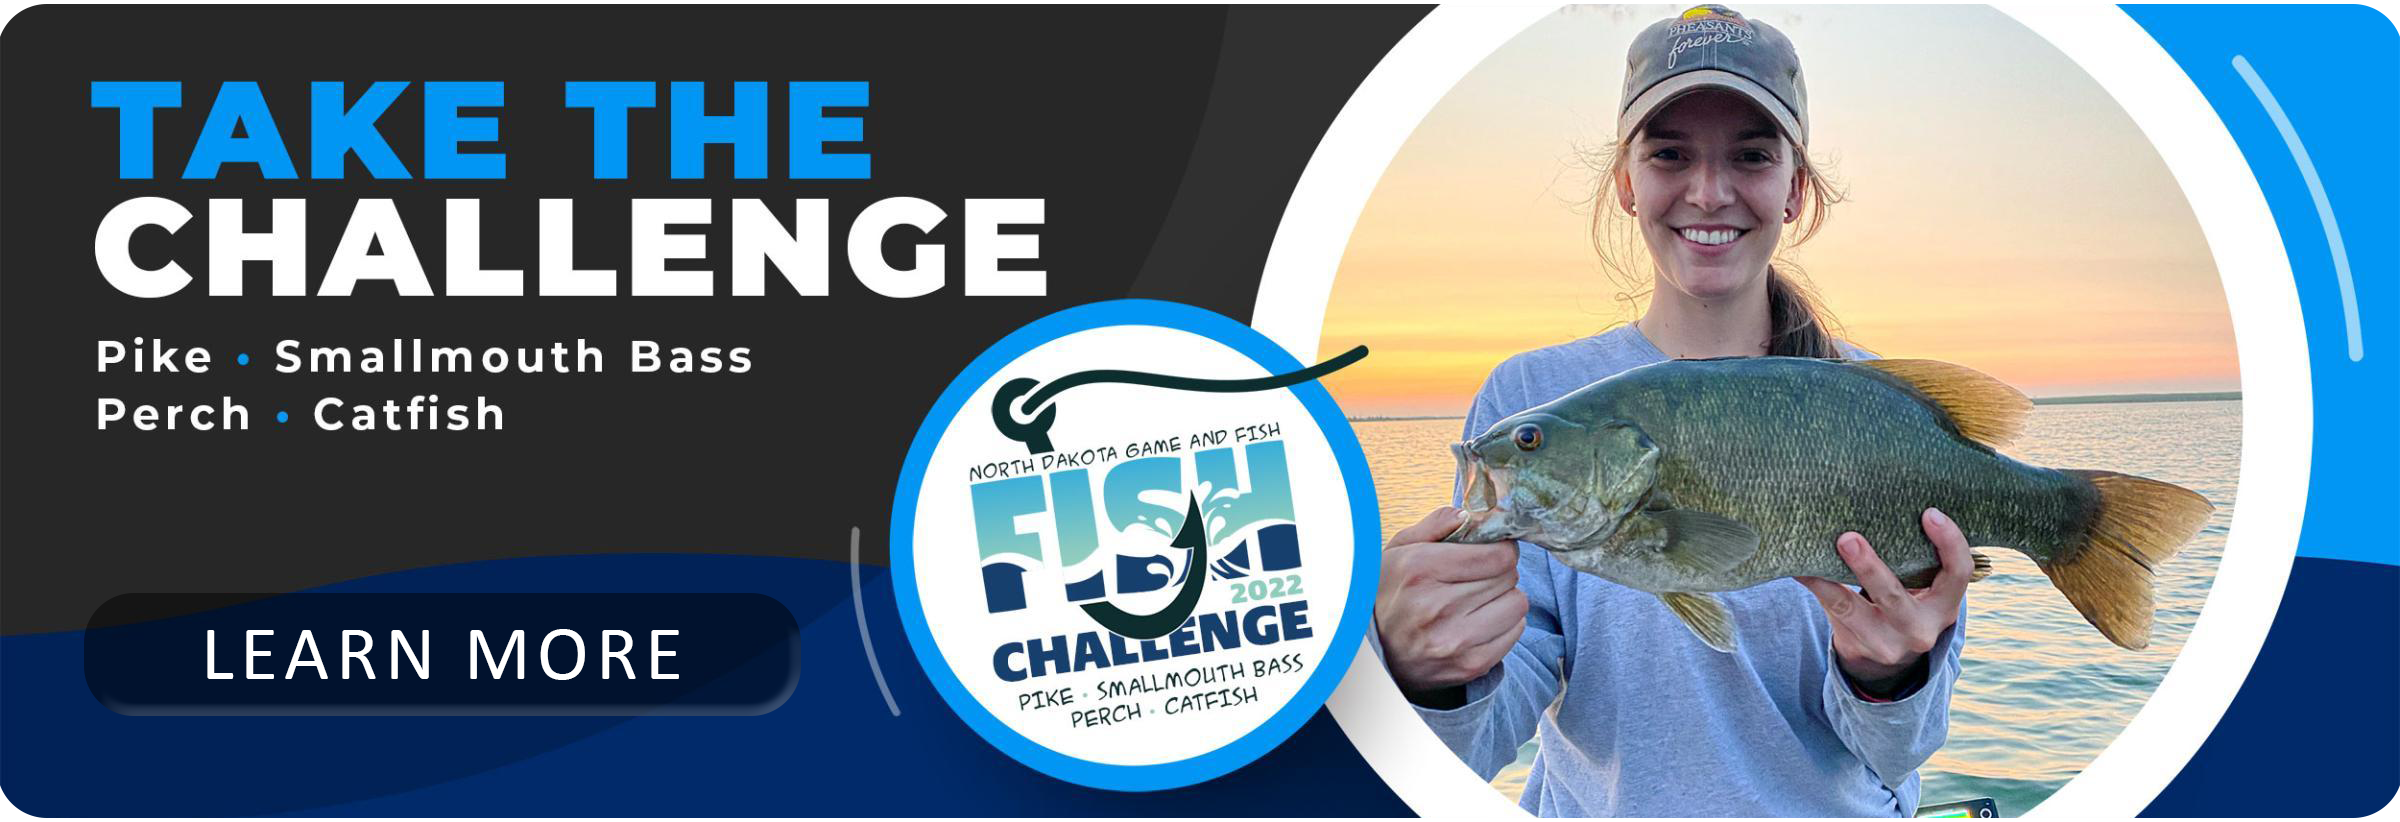 Fish challenge ad